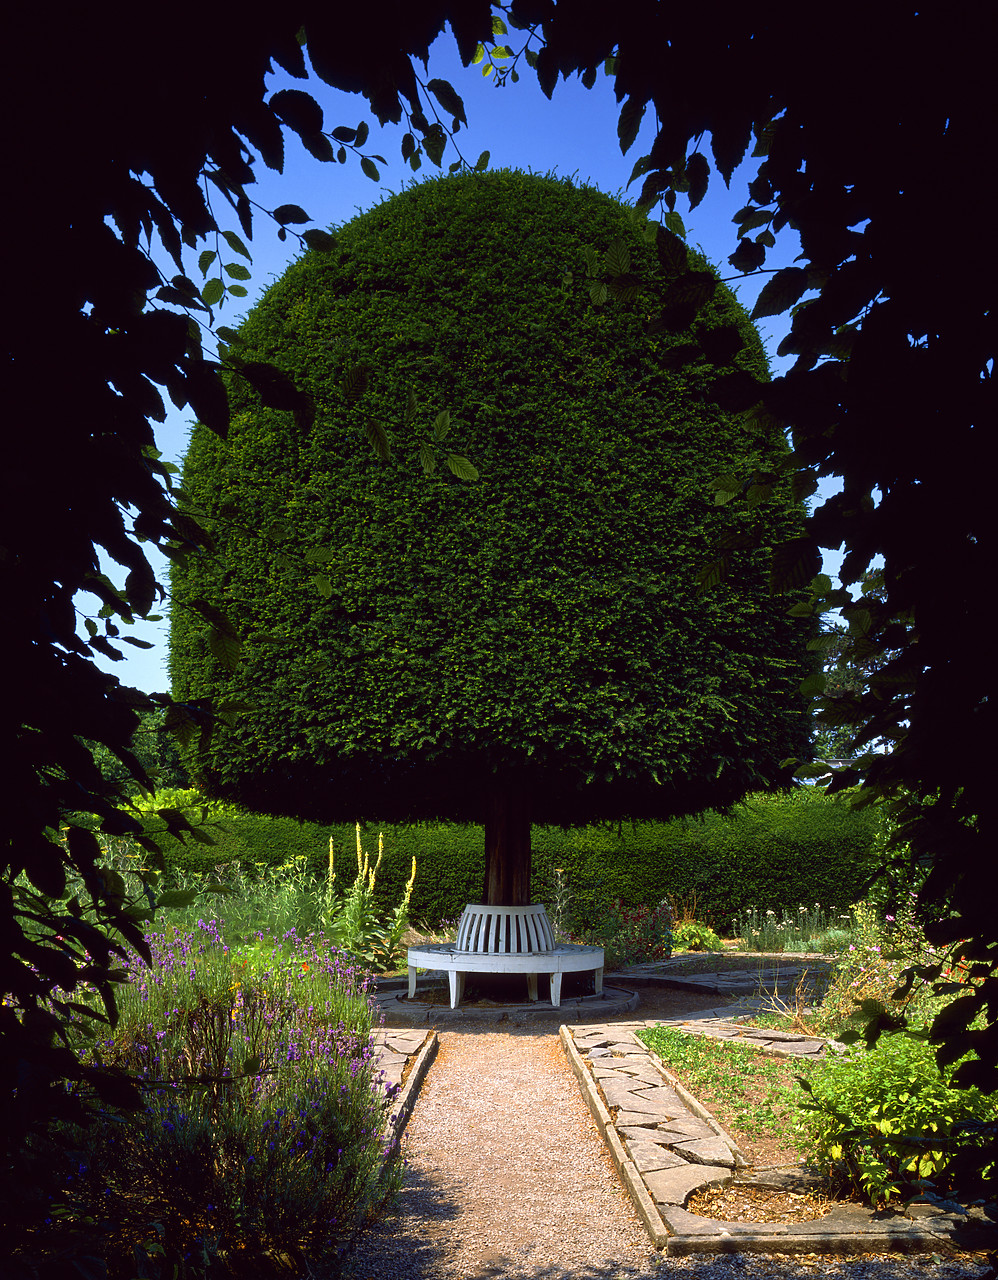 #903024-1 - Irish Yew Tree, St. Fagans, Cardiff, Wales